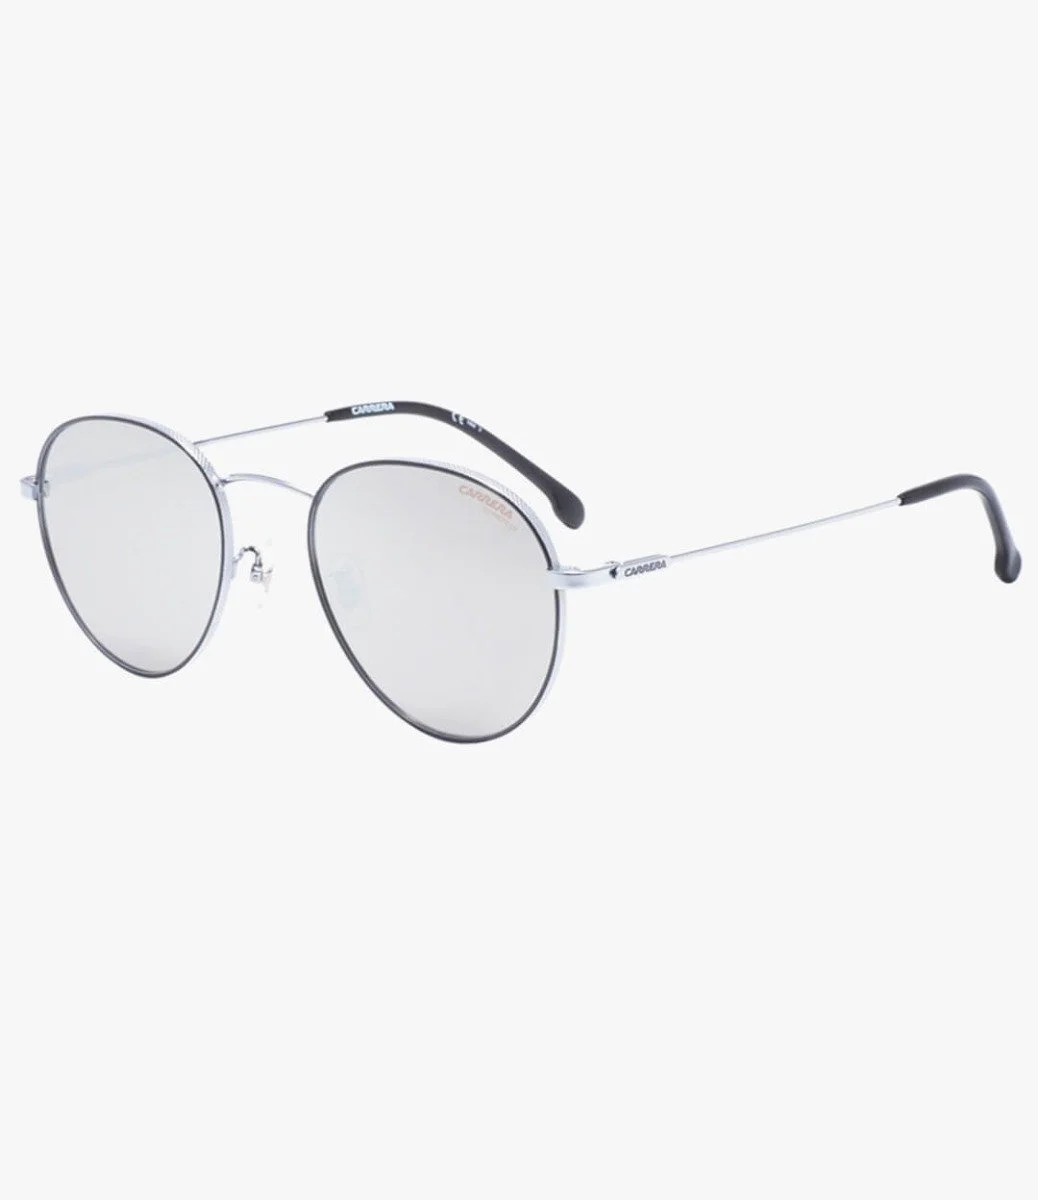 Carrera Sunglasses - 2